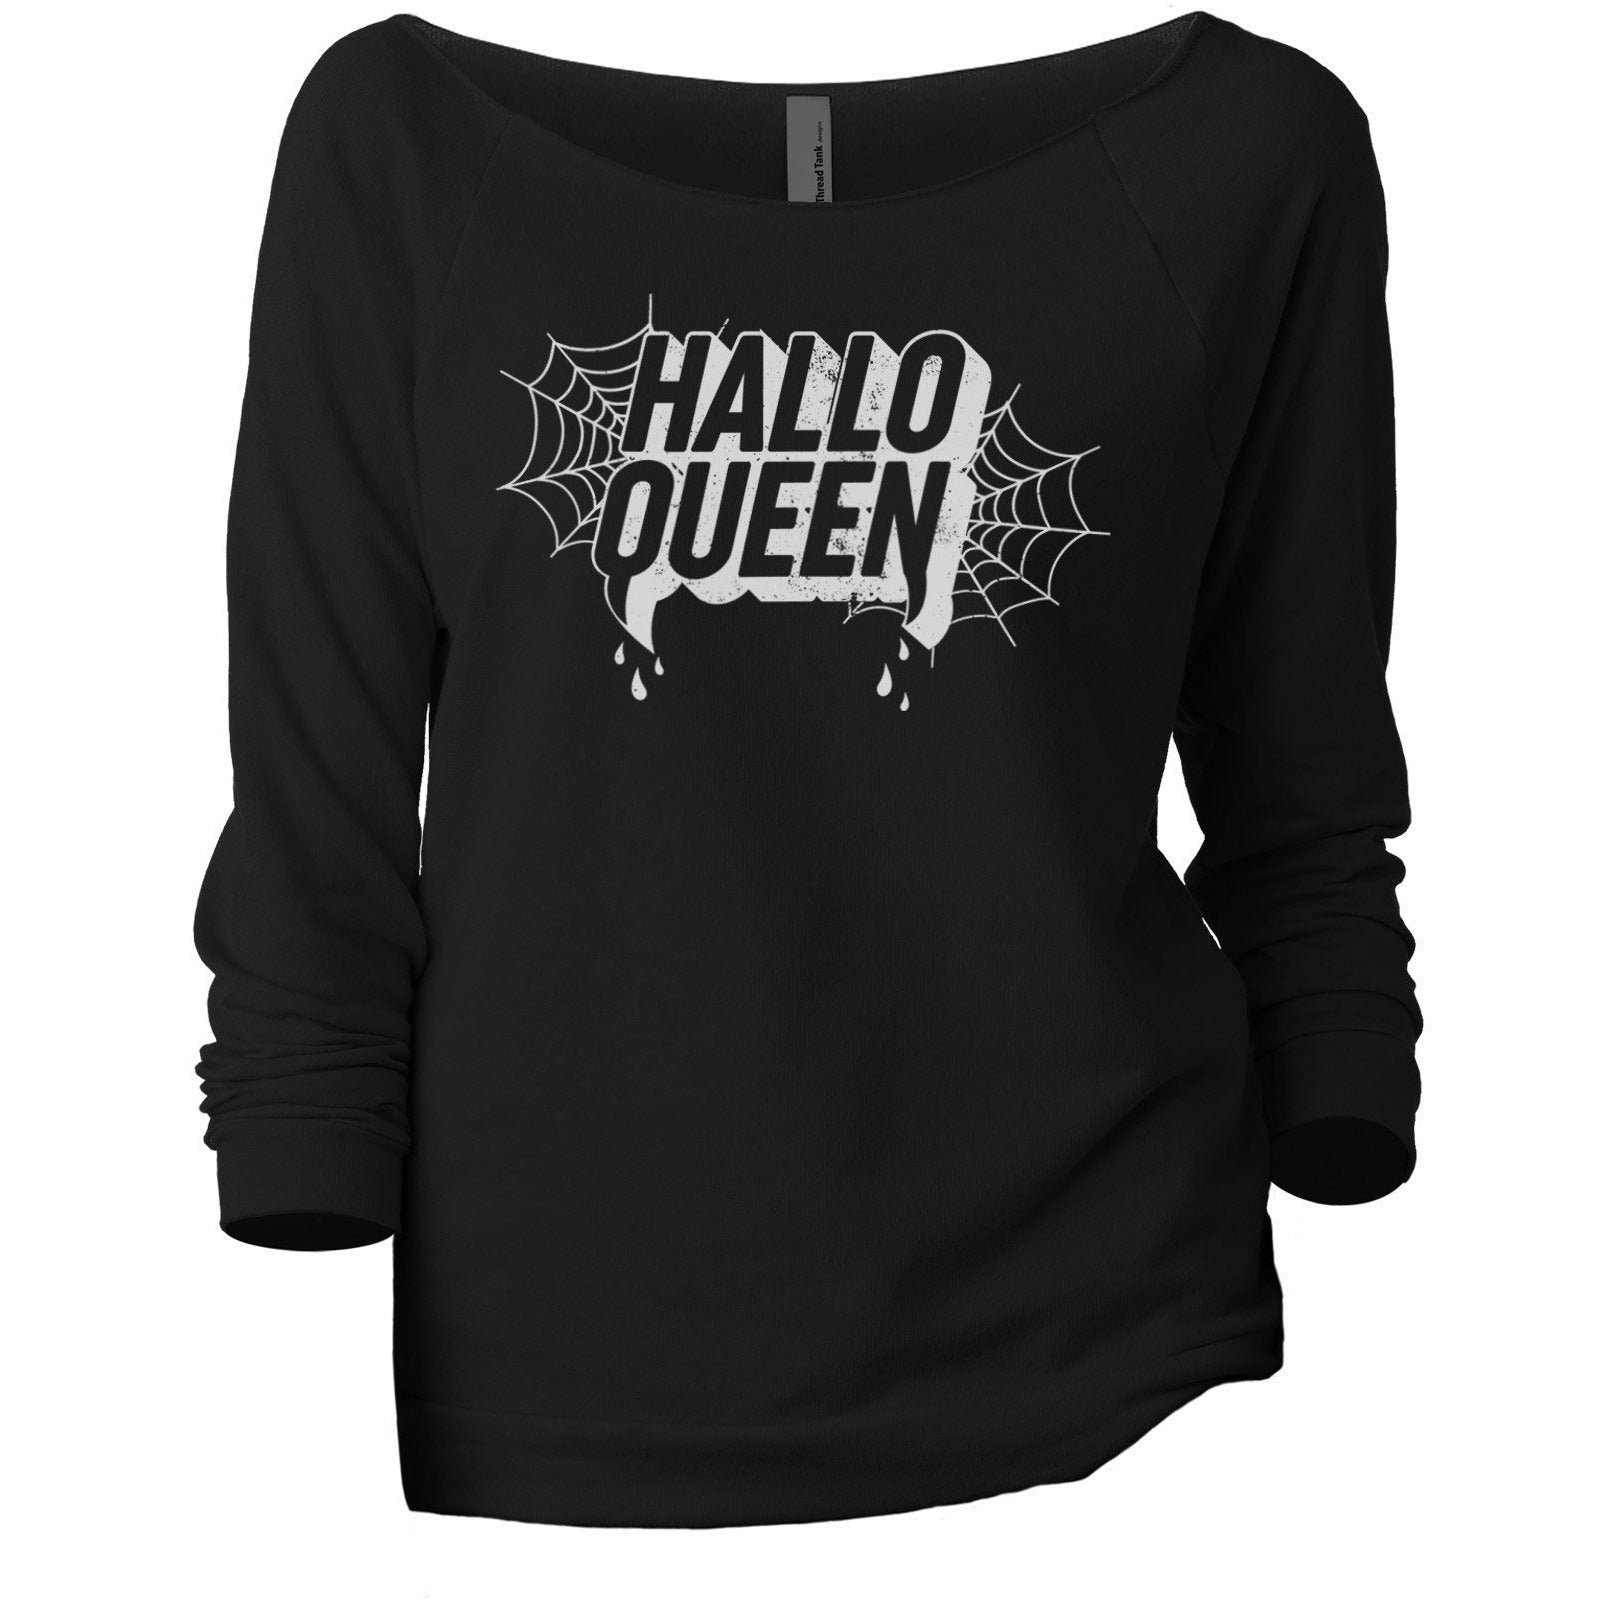 Hallo Queen Women's Graphic Printed Lightweight Slouchy 3/4 Sleeves Sweatshirt Sport Grey